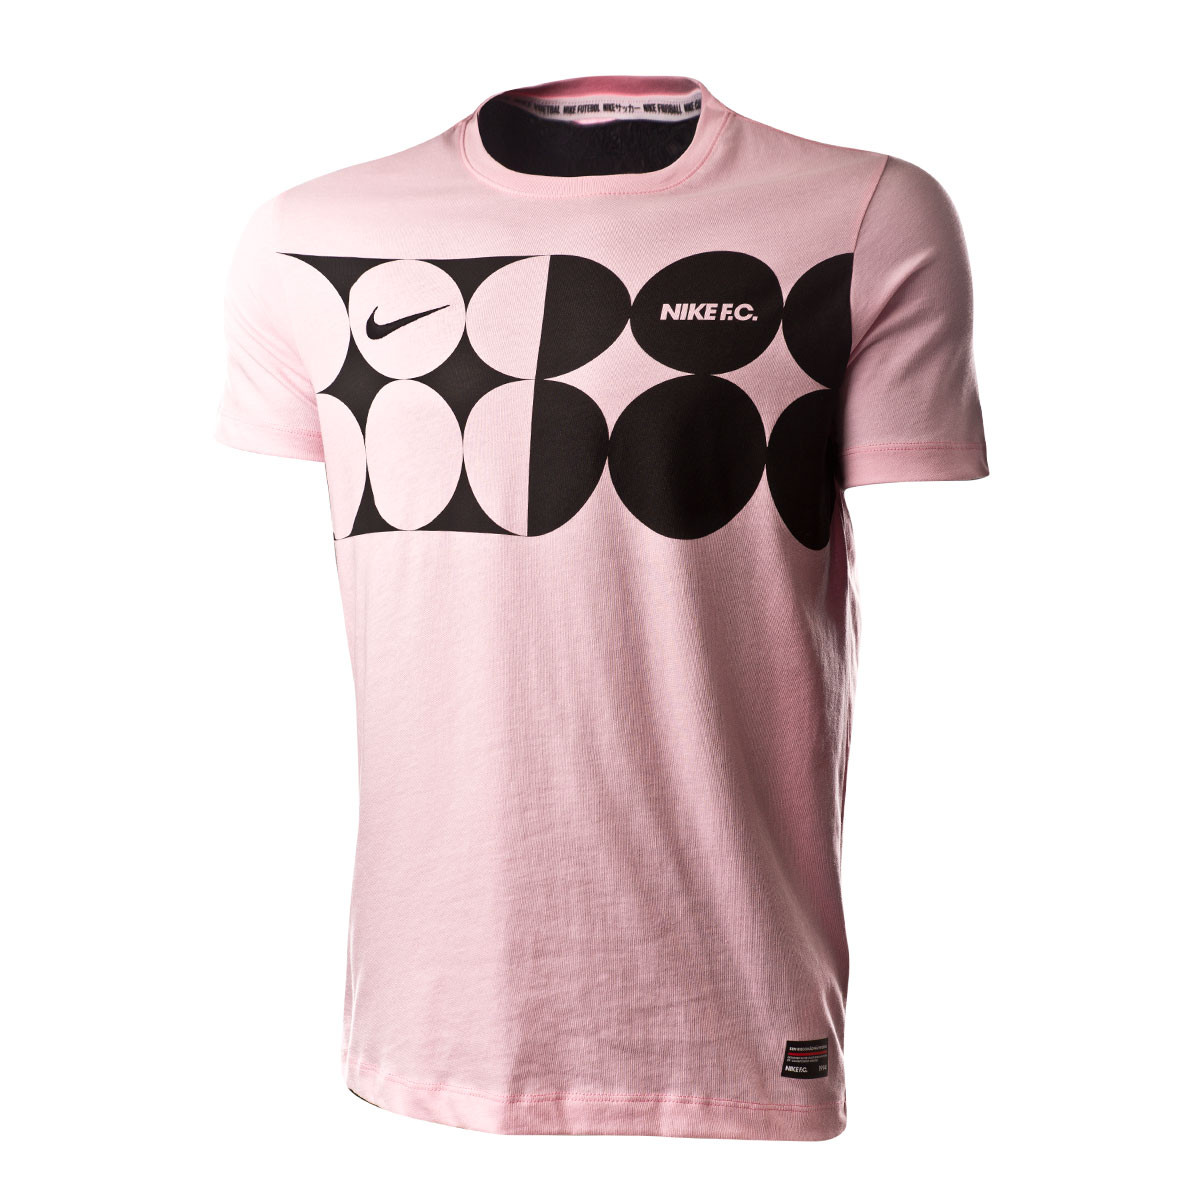 Camiseta Nike Nike F.C. Circle Soft pink - Tienda de fútbol Fútbol Emotion